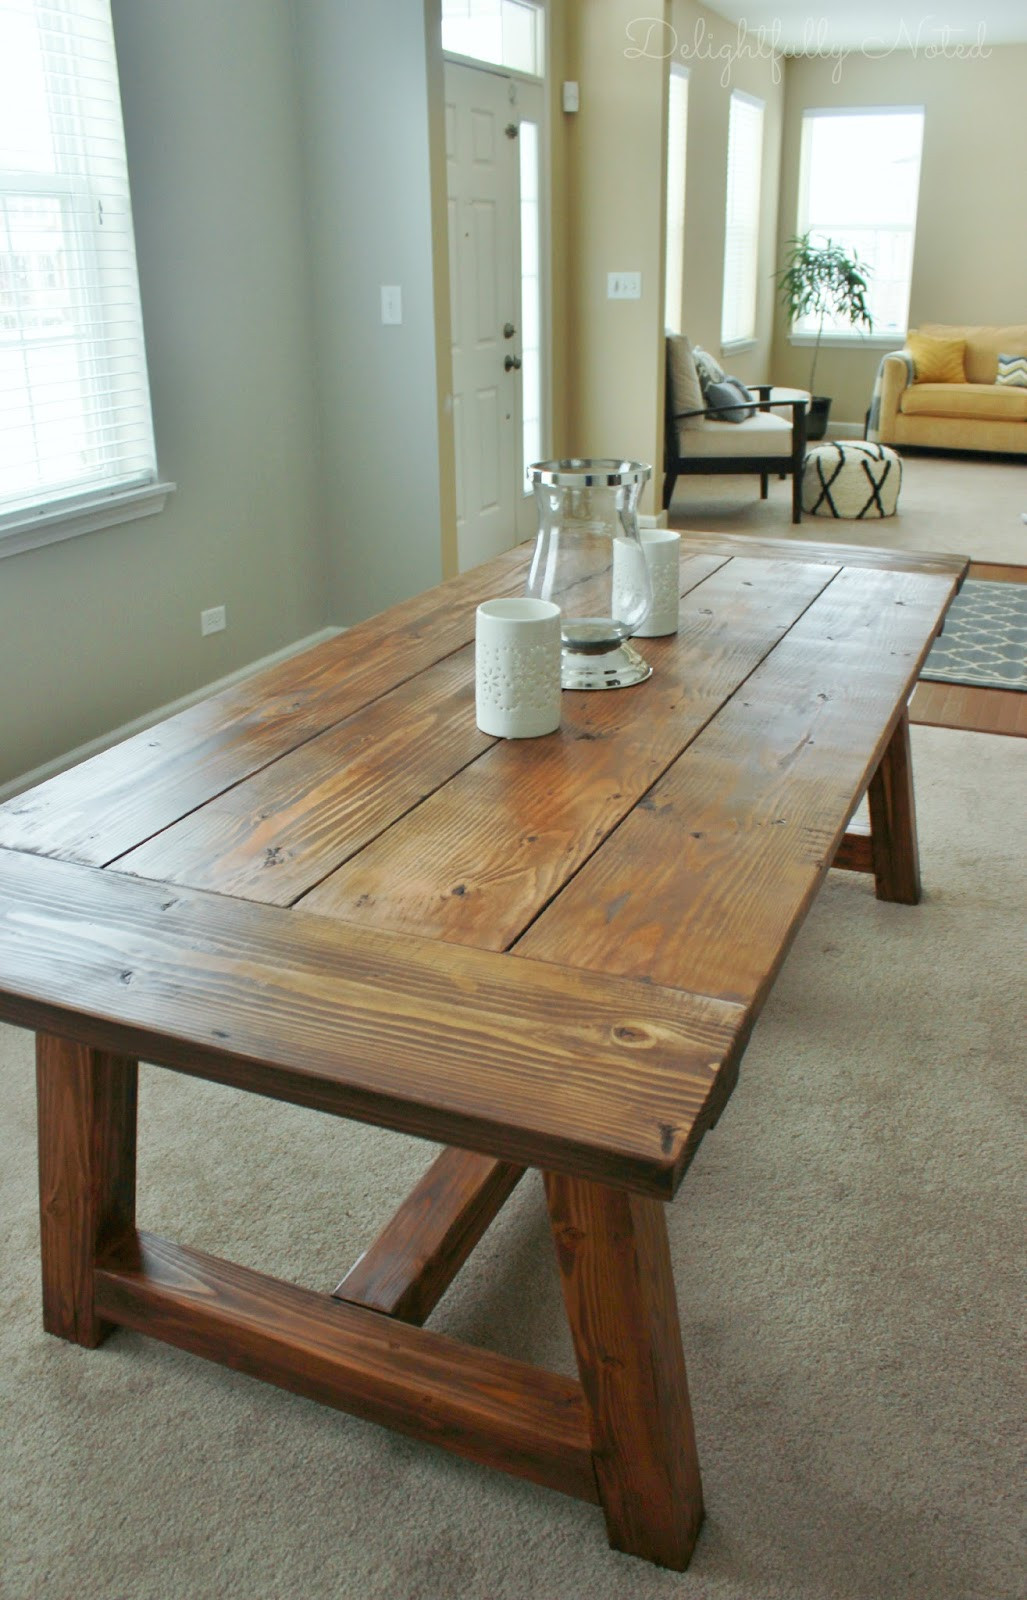 Best ideas about DIY Farmhouse Table
. Save or Pin Holy Cannoli We Built a Farmhouse Dining Room Table Now.